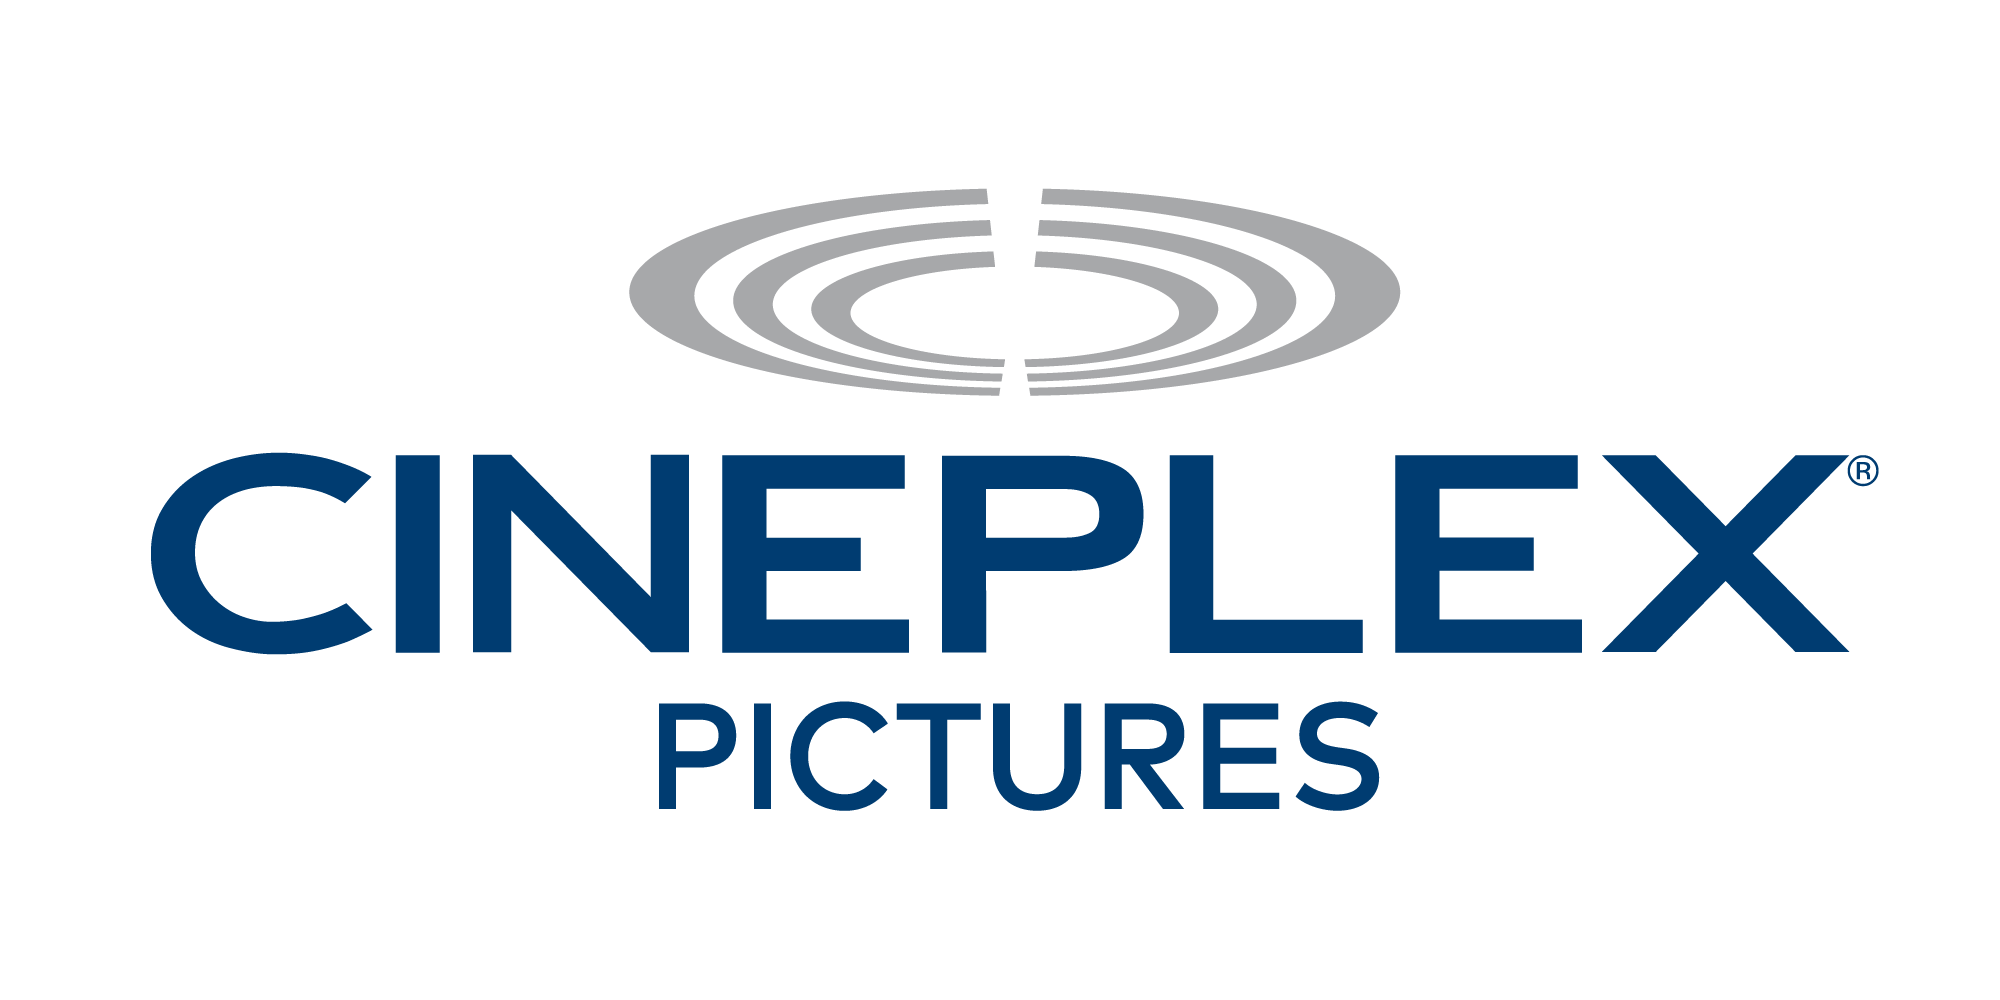 Cineplex Pictures